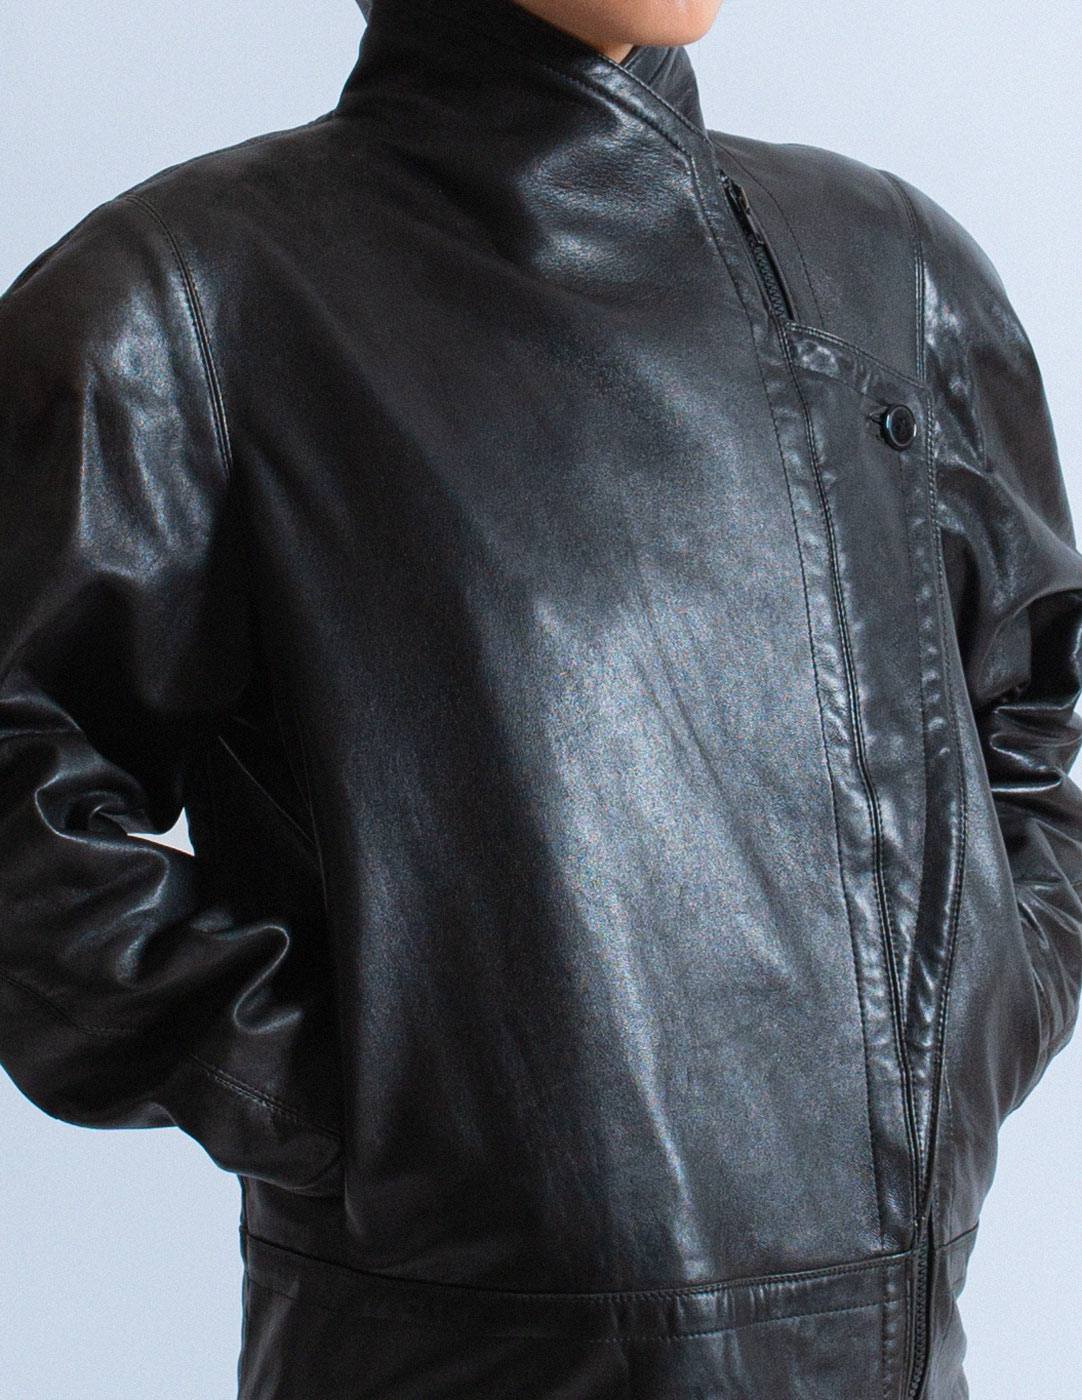 Gianni Versace vintage leather moto jacket detail